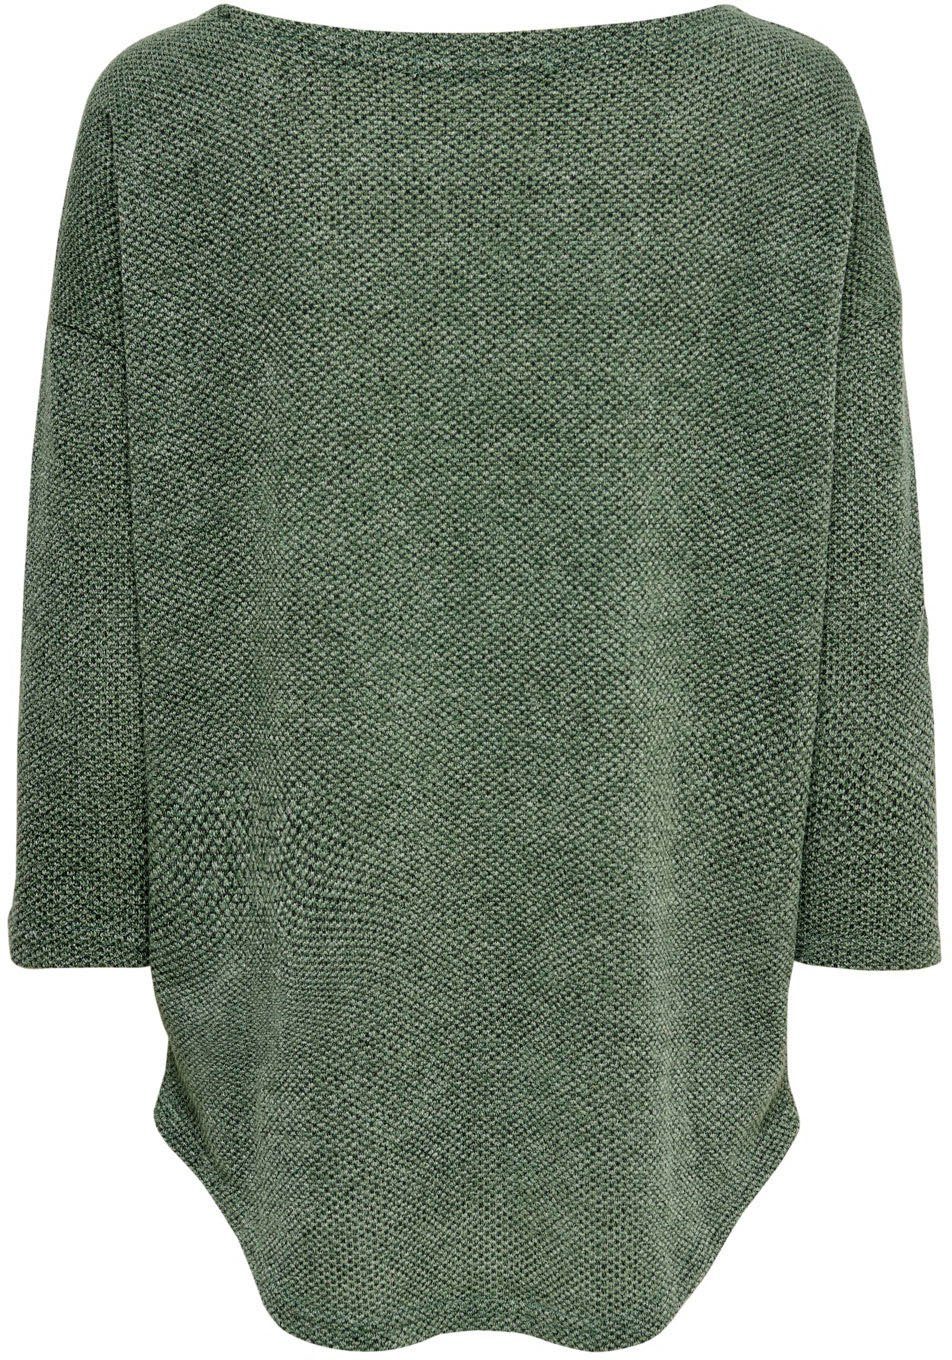 ONLALBA graugrün ONLY 3/4-Arm-Shirt